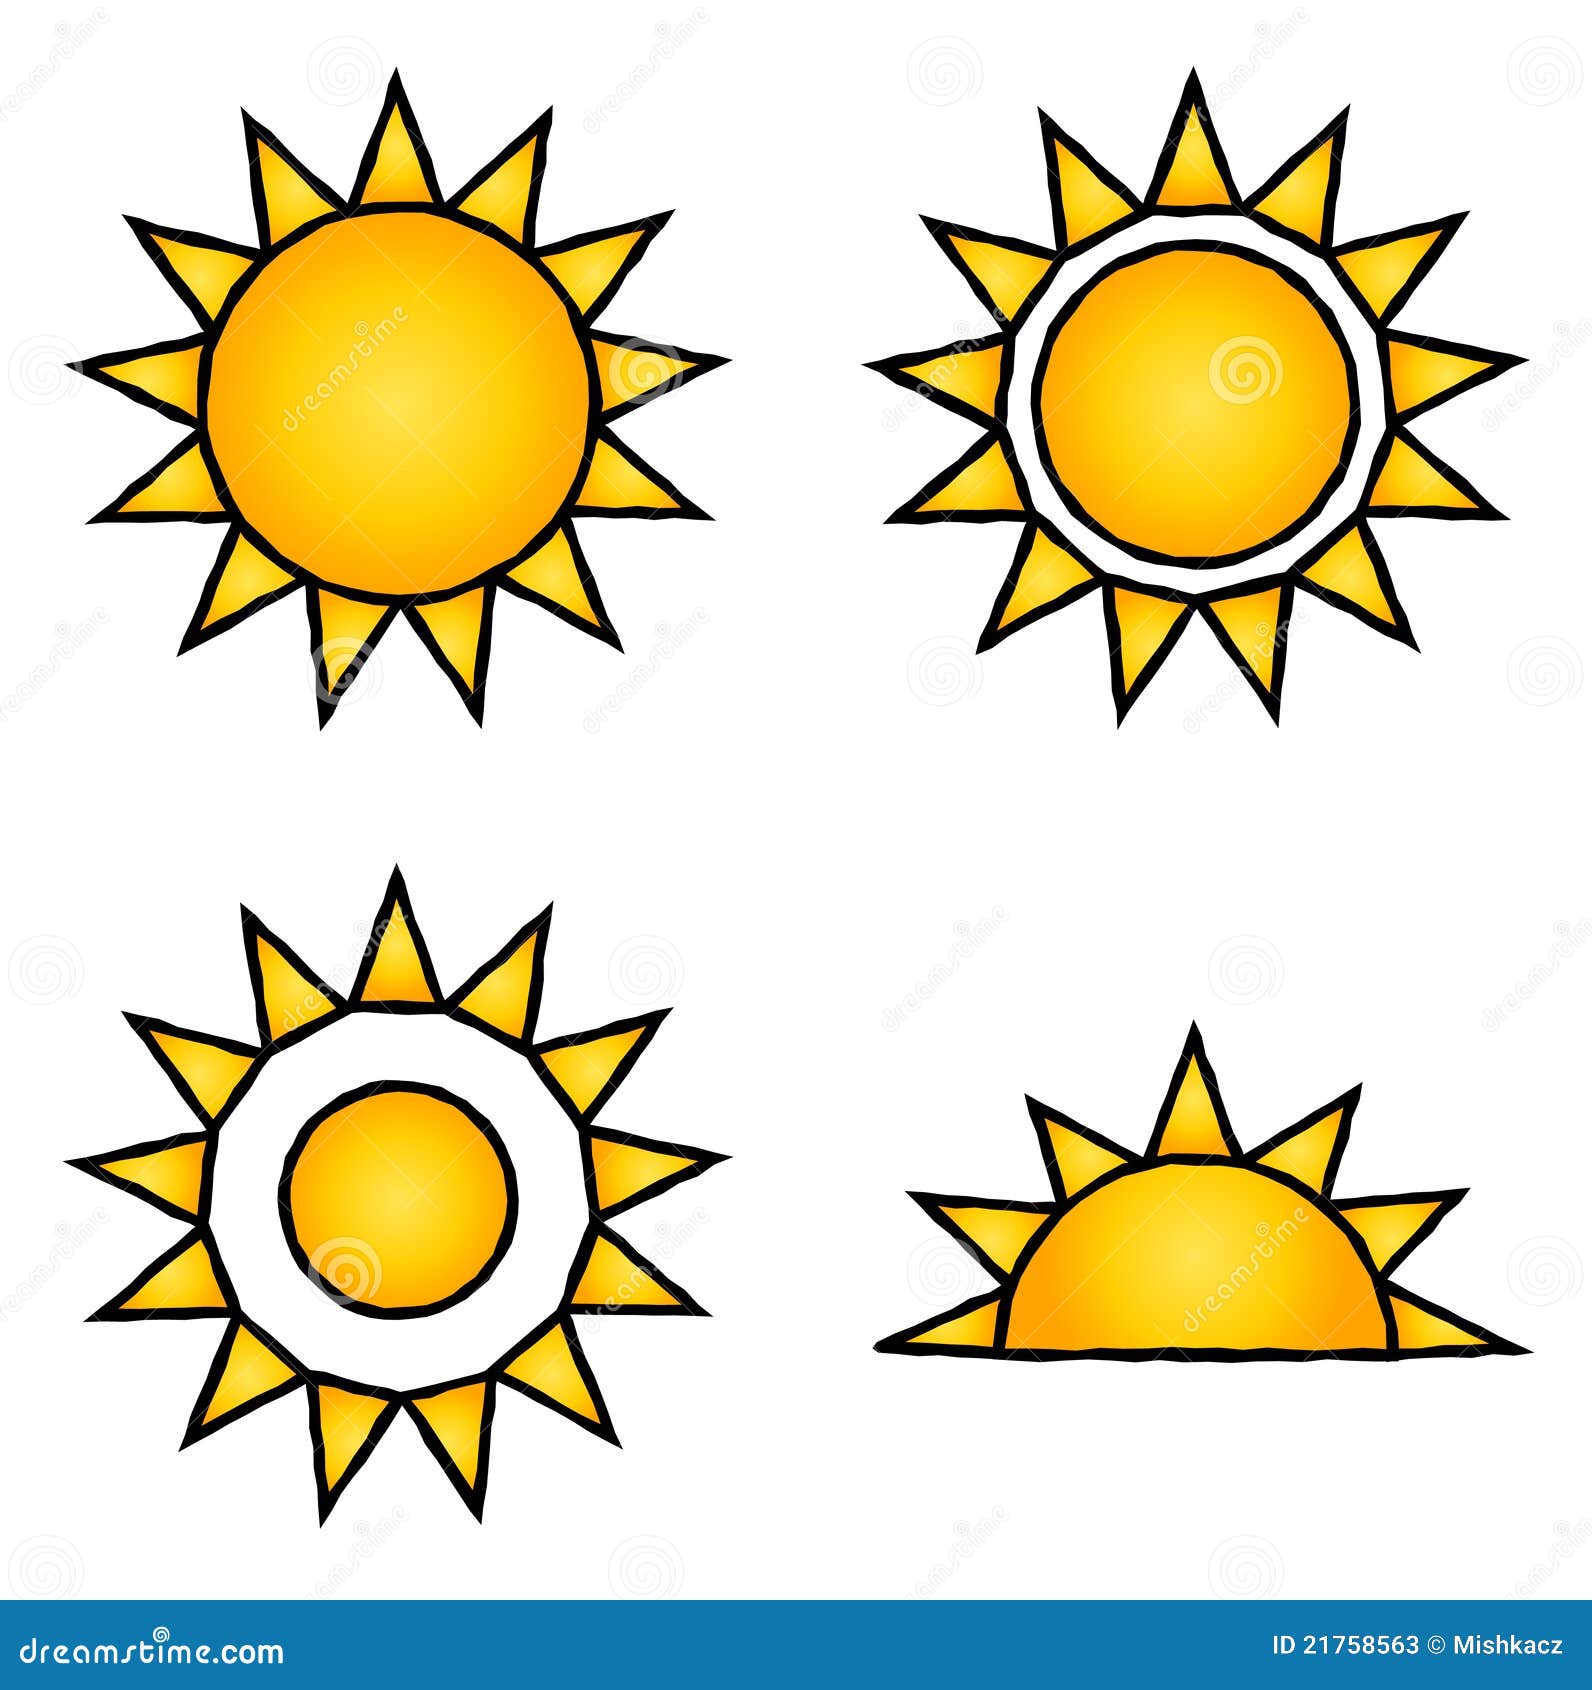 Sun Icons Stock Photos - Image: 21758563